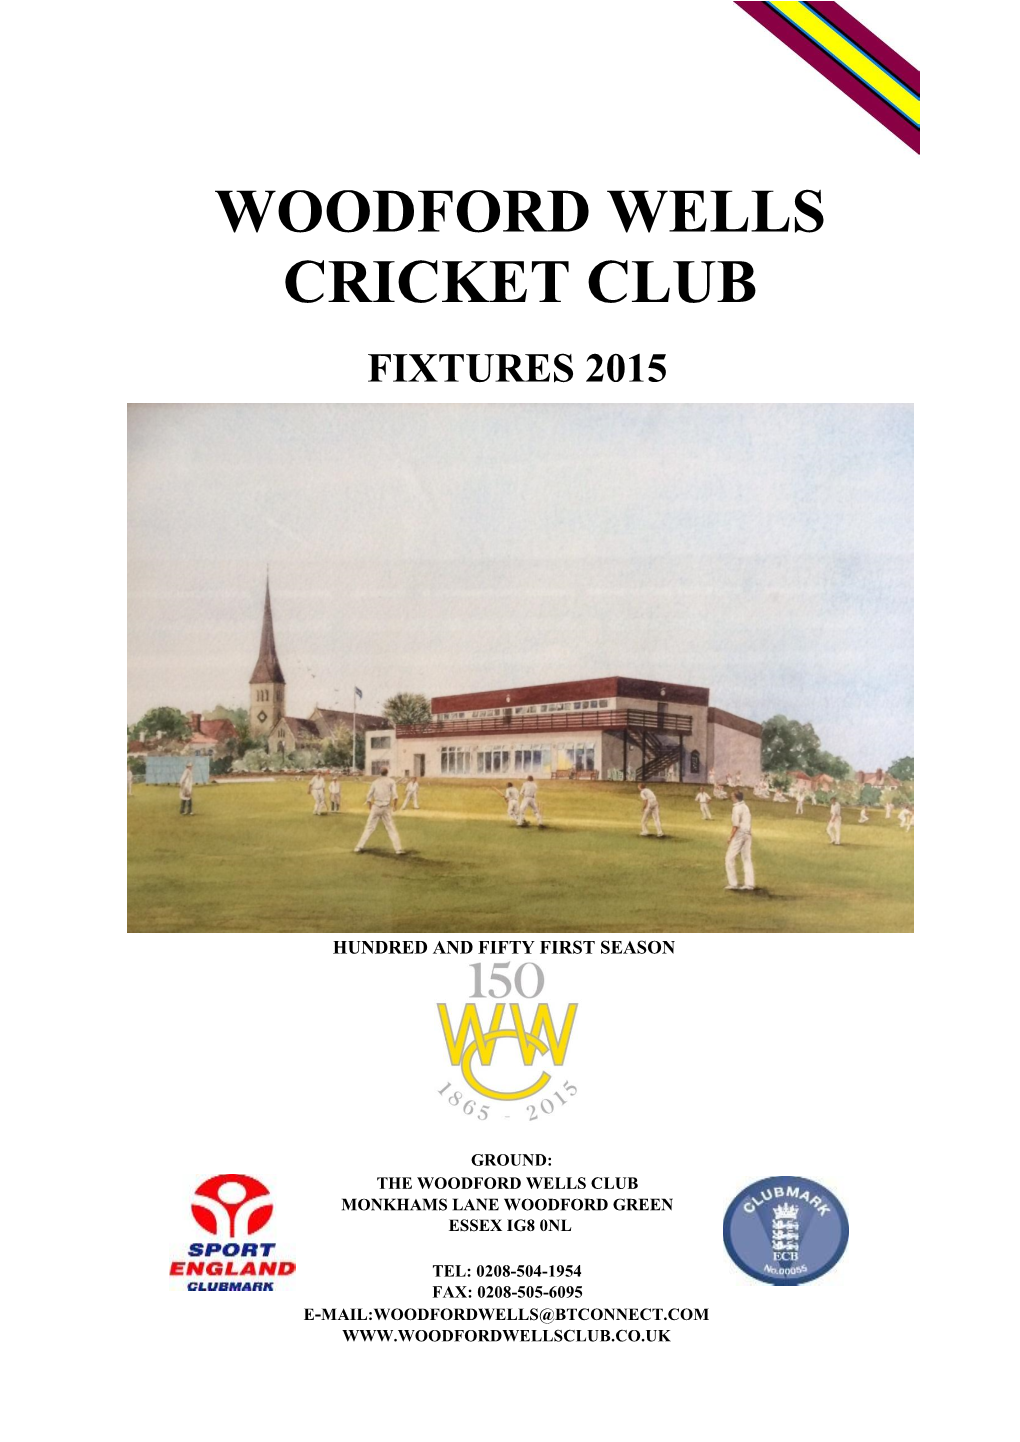 Woodford Wells Cricket Club